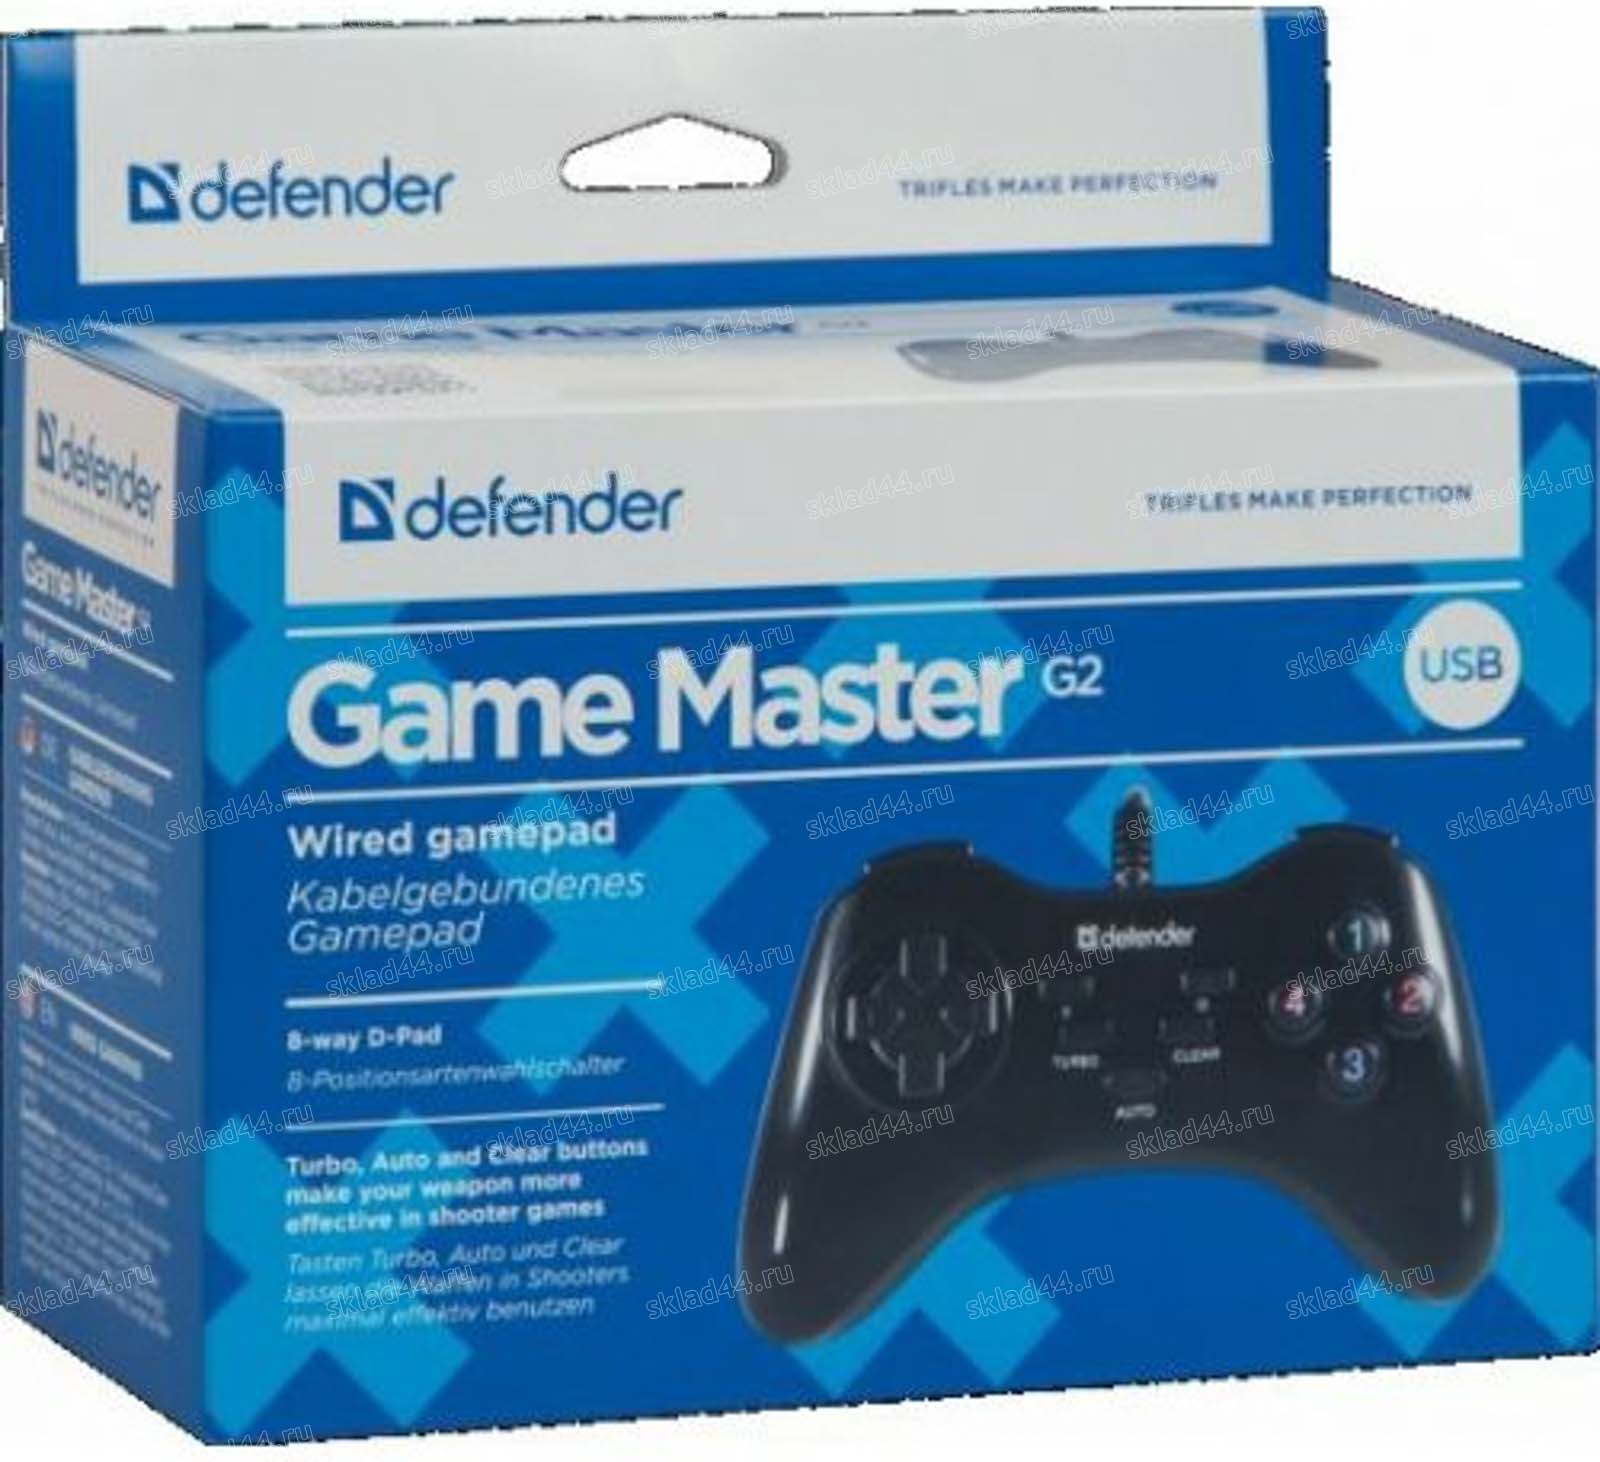 Master g2. Геймпад Defender g2. Джойстик Дефендер проводной. Геймпад Дефендер гейм мастер. Геймпад проводной Defender game Master g2 13 кнопок USB ПК ps3.